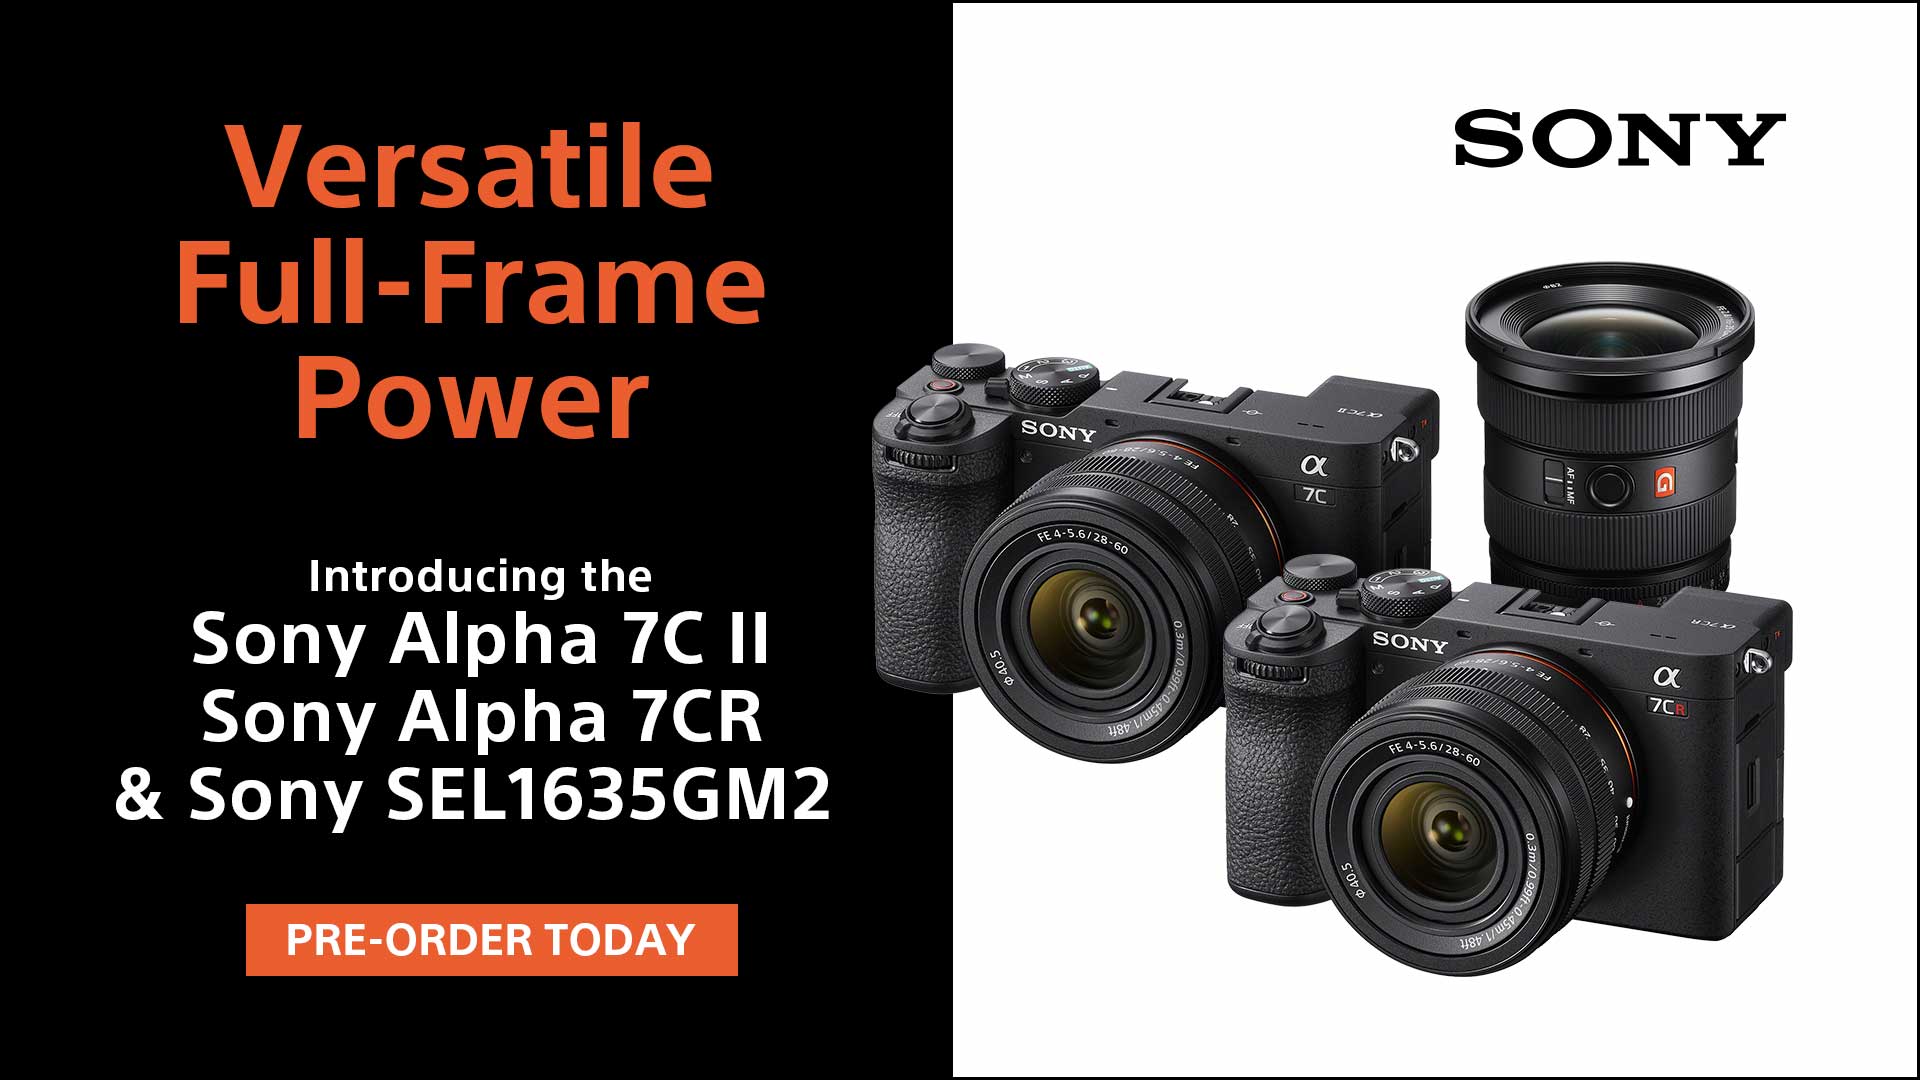 Sony Announces New A7C Series Cameras